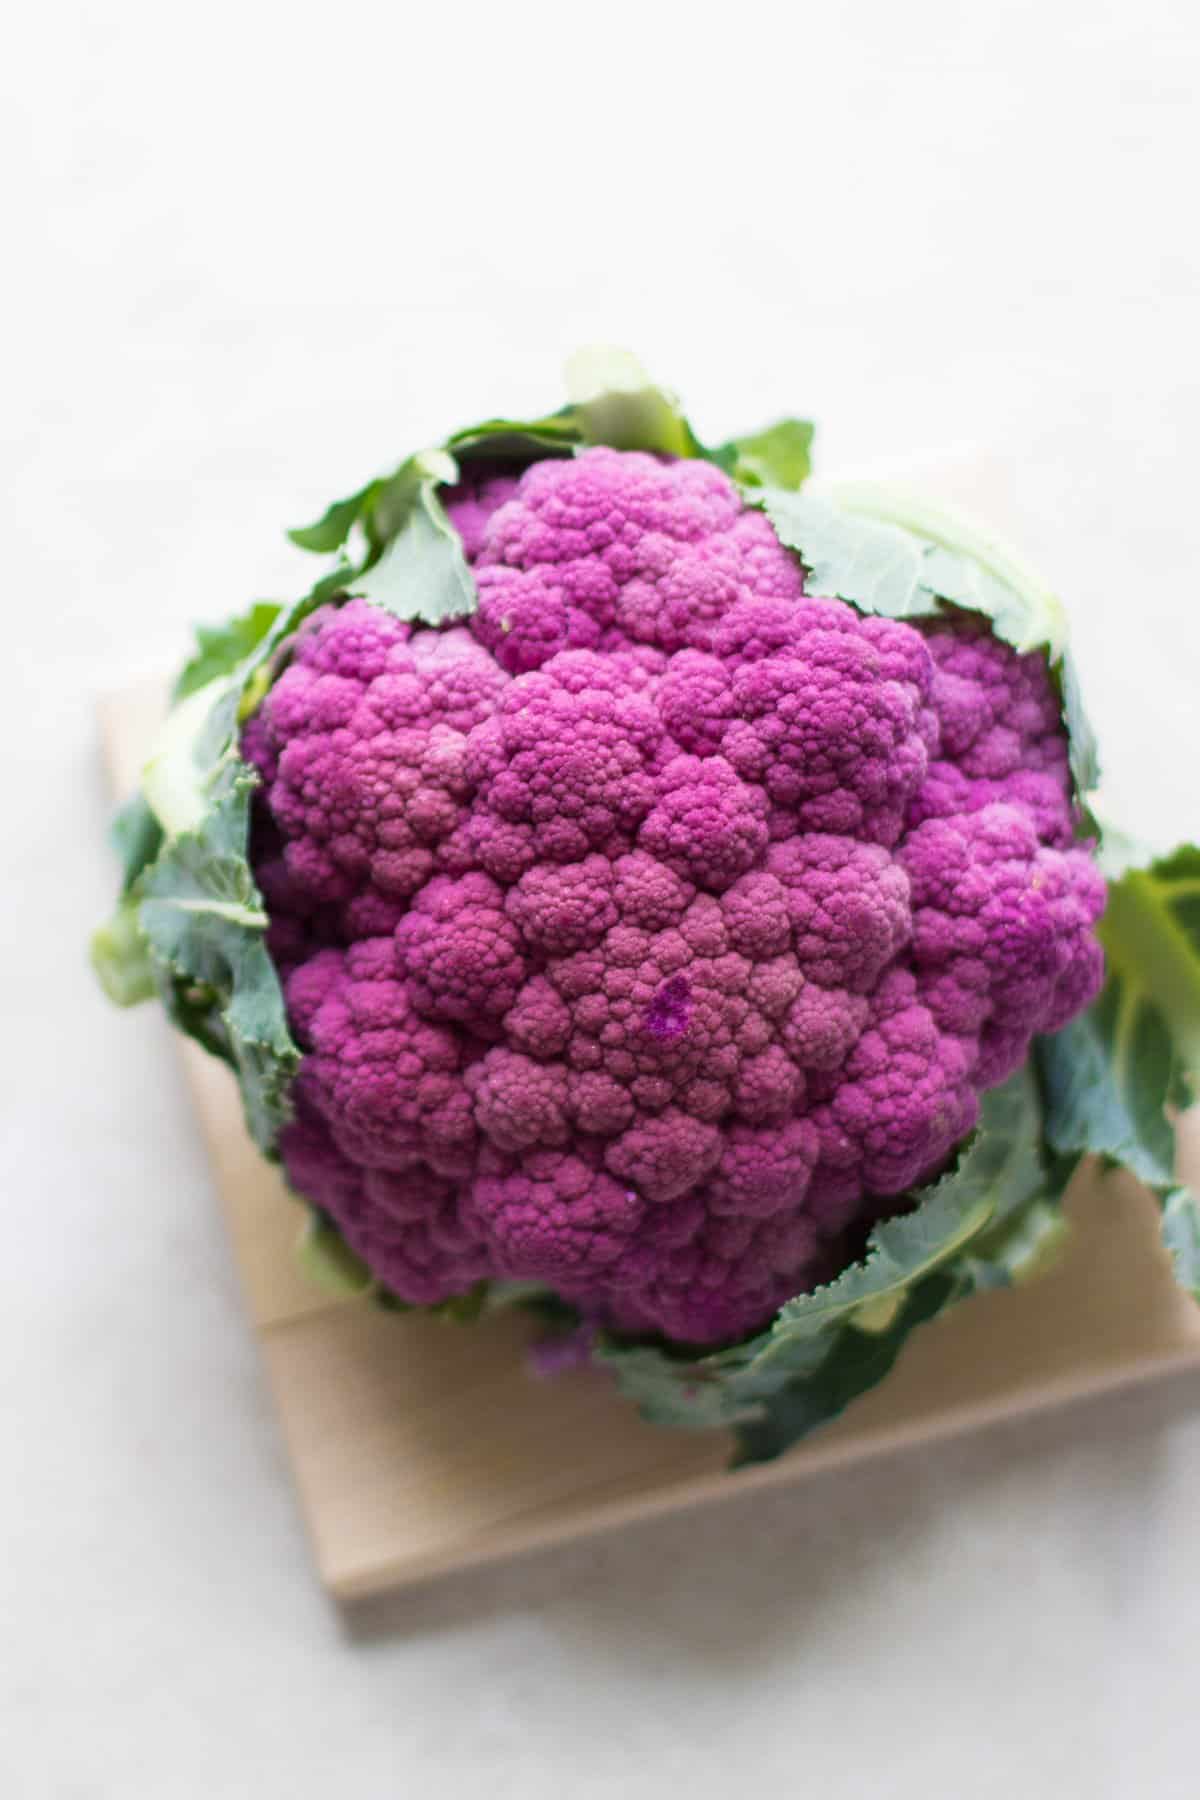 Purple cauliflower.